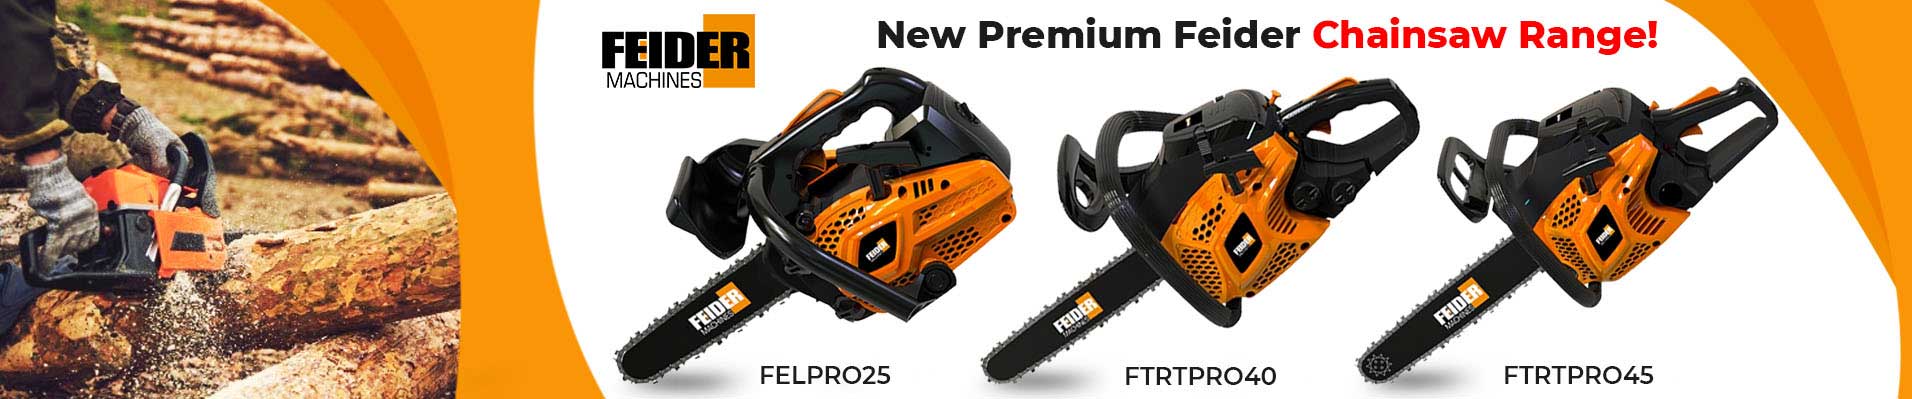 New Premium Range Of Chainsaws From Feide 2r